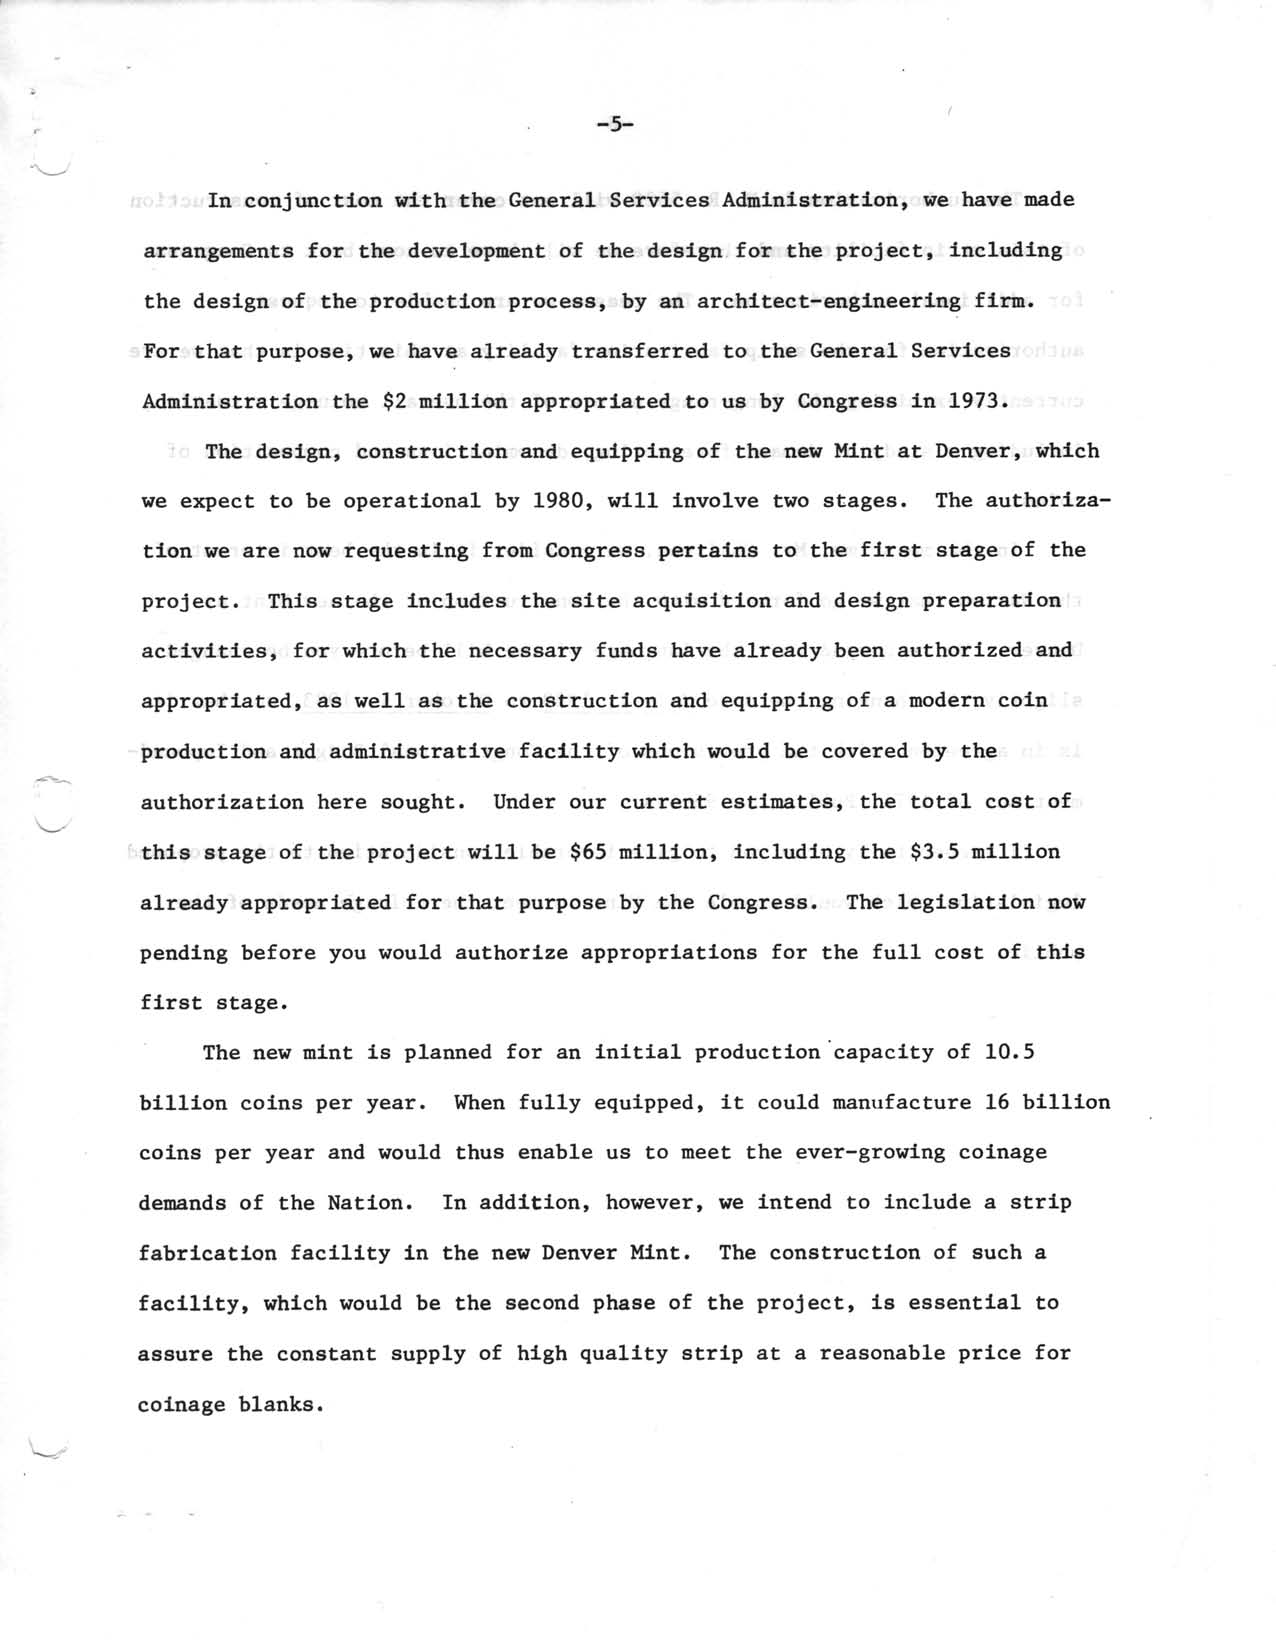 Historic Press Release: Brooks' Statement New Denver Mint, Page 5